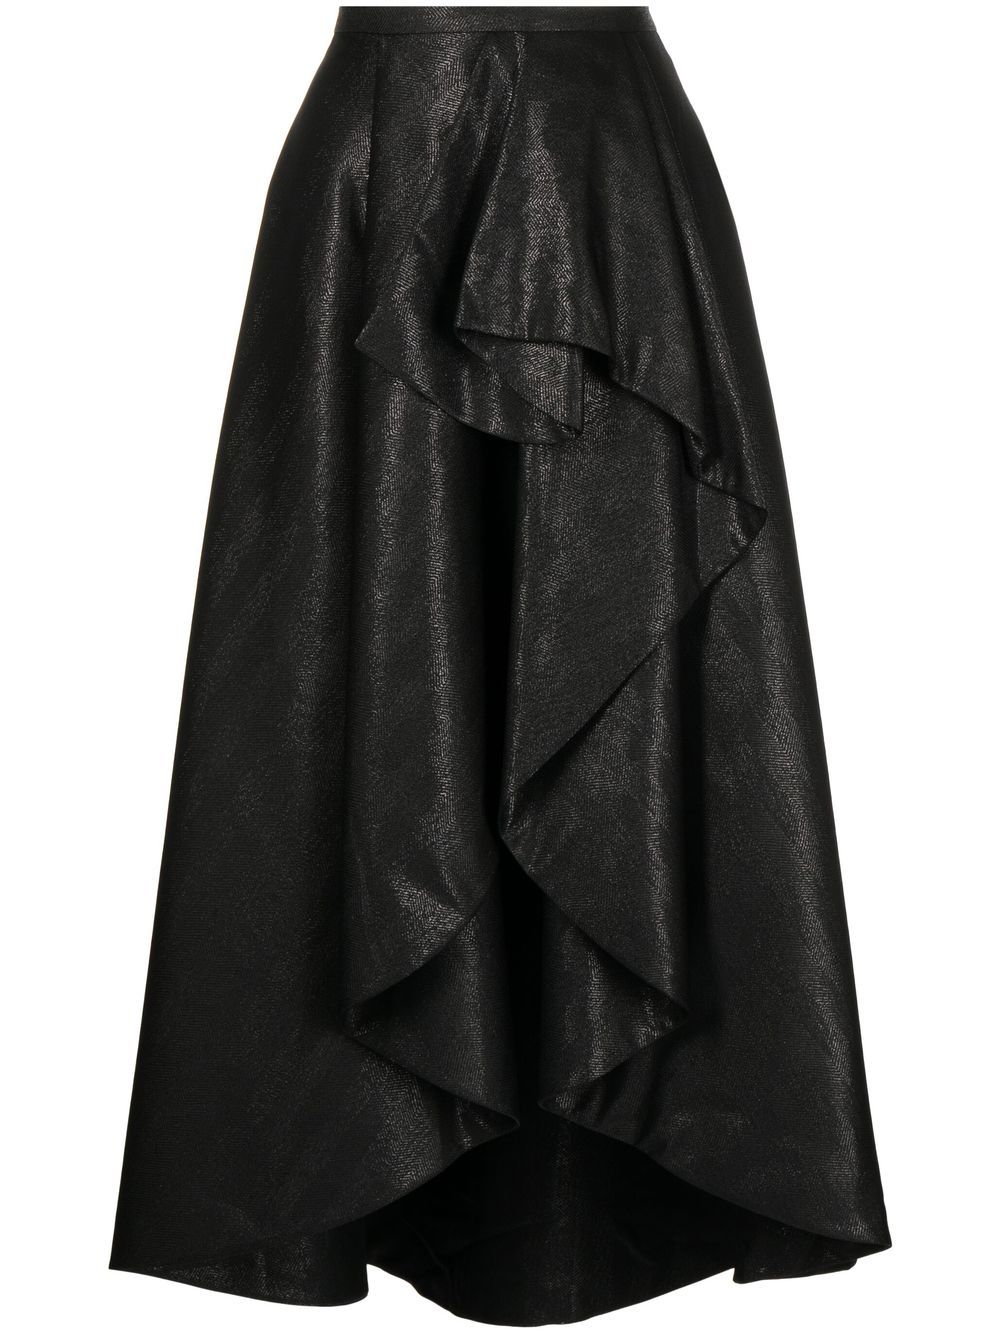 Saiid Kobeisy Brocade asymmetric ruffle skirt - Black von Saiid Kobeisy